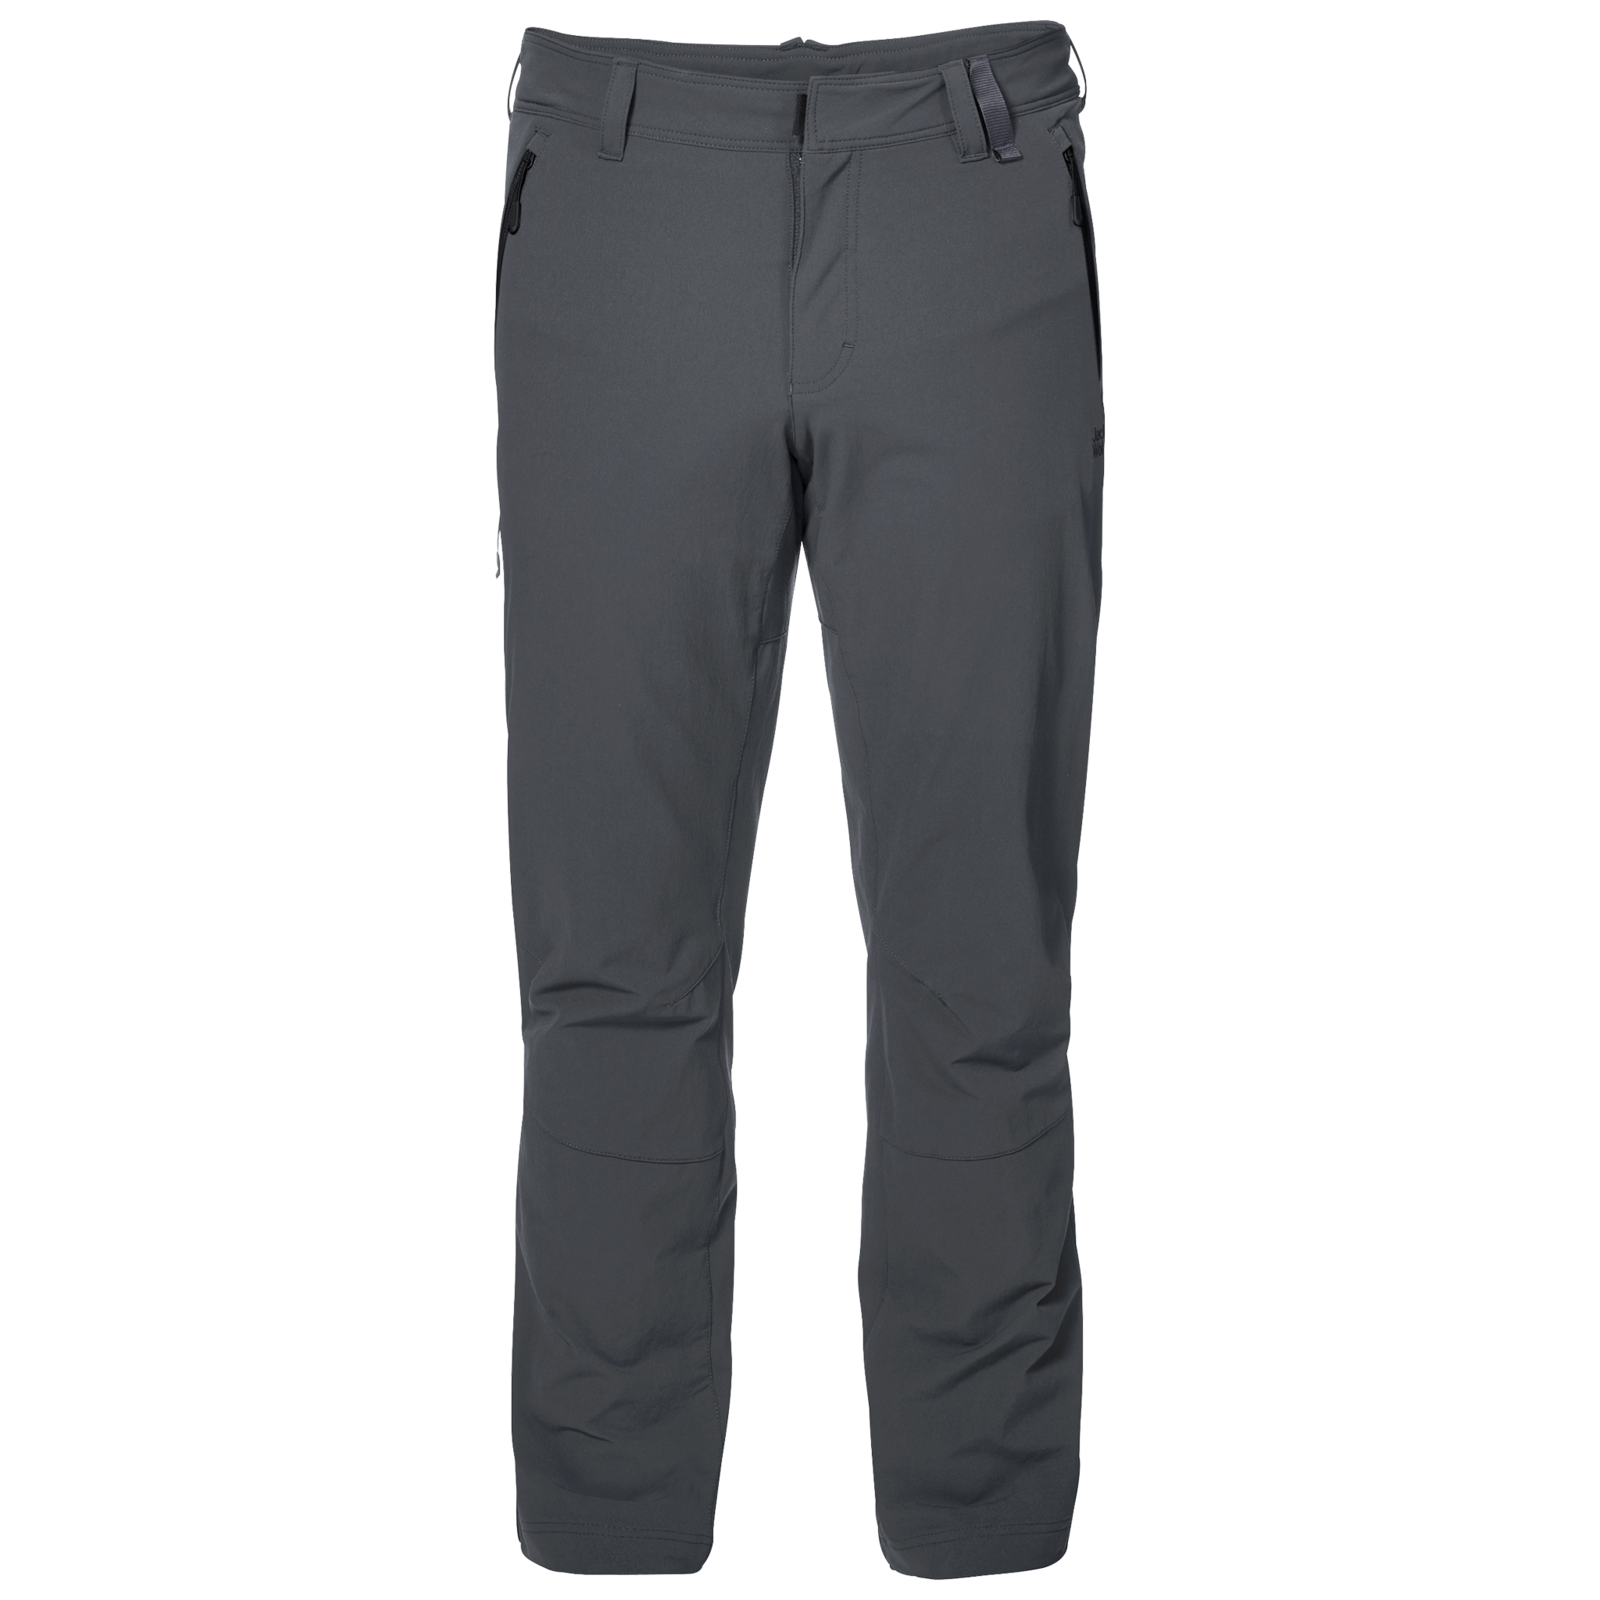 Jack Men's Pants Winter Outdoor Trousers Hiking | eBay